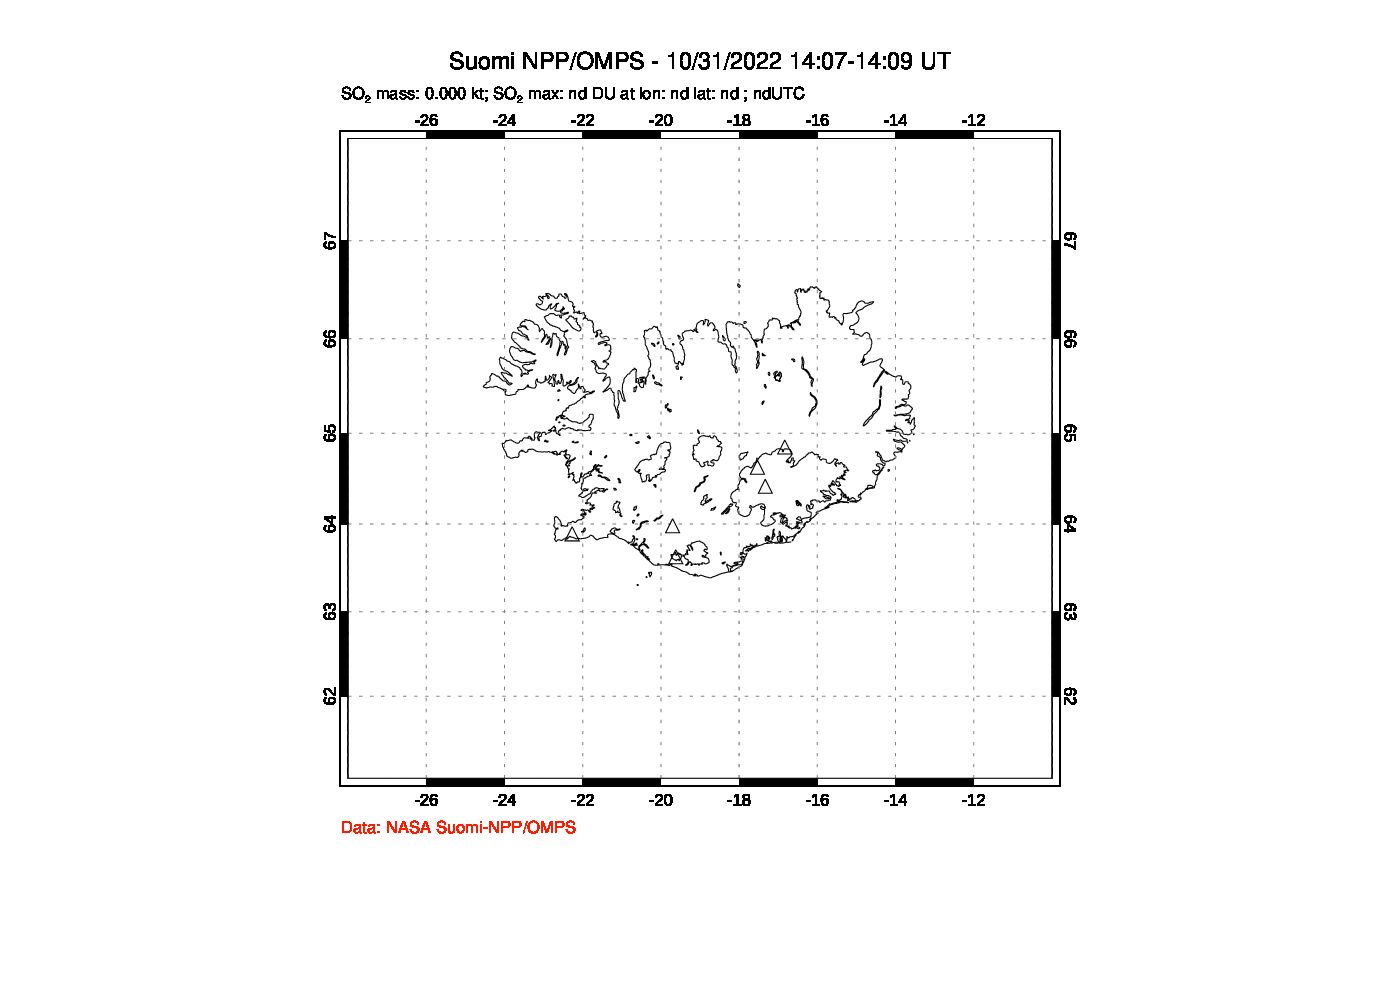 A sulfur dioxide image over Iceland on Oct 31, 2022.